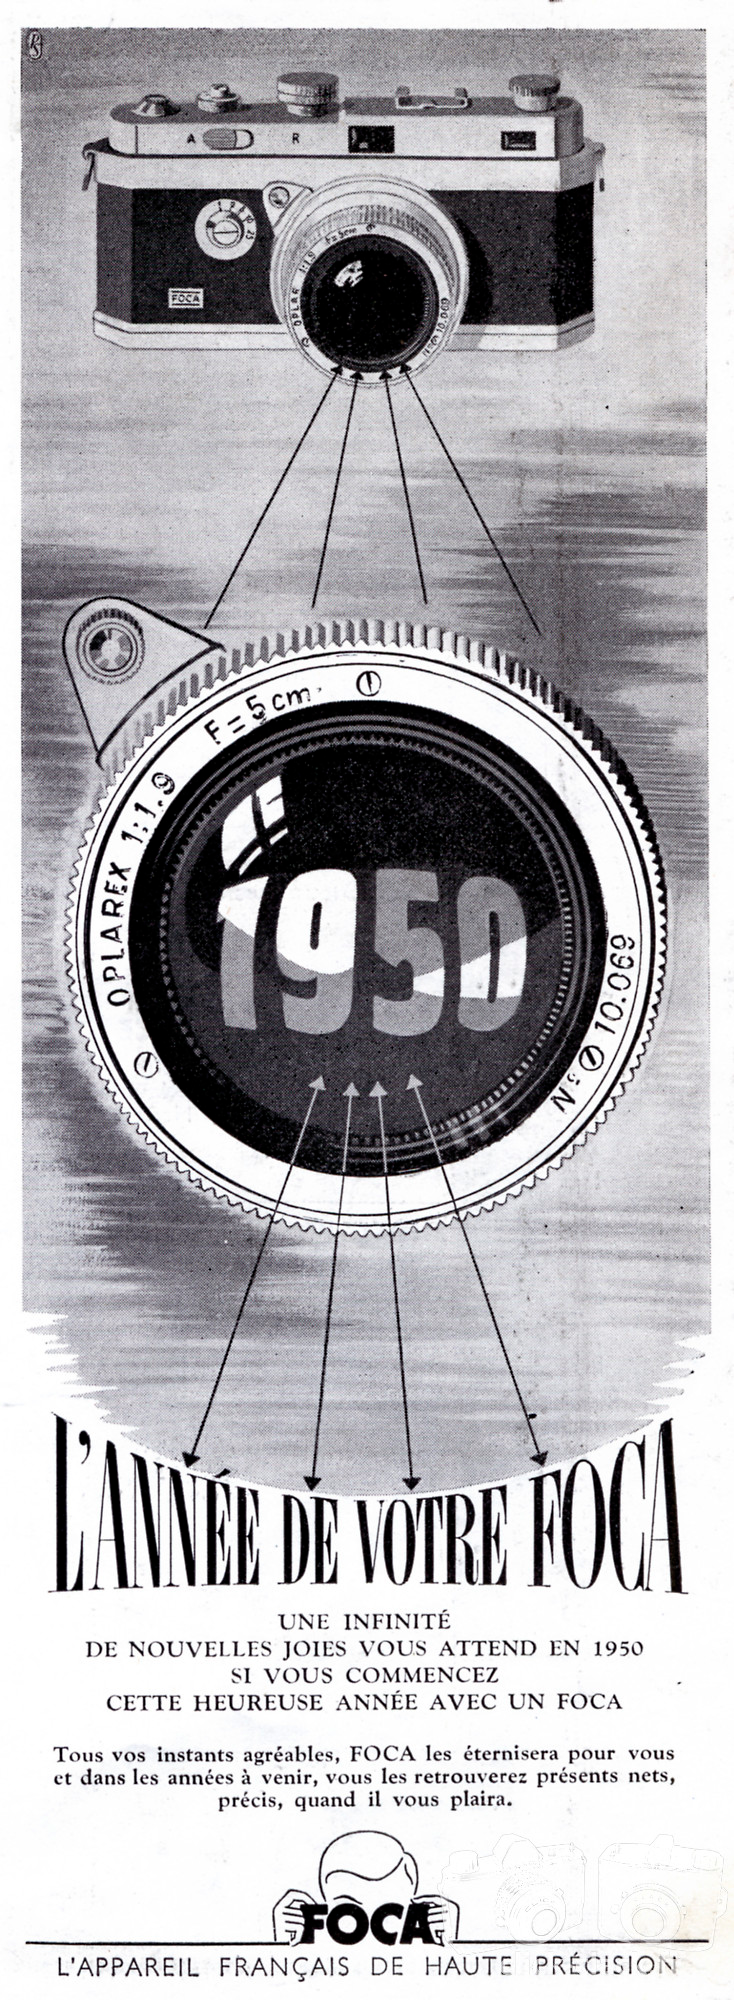 OPL - Foca Universel, Oplarex - 1950